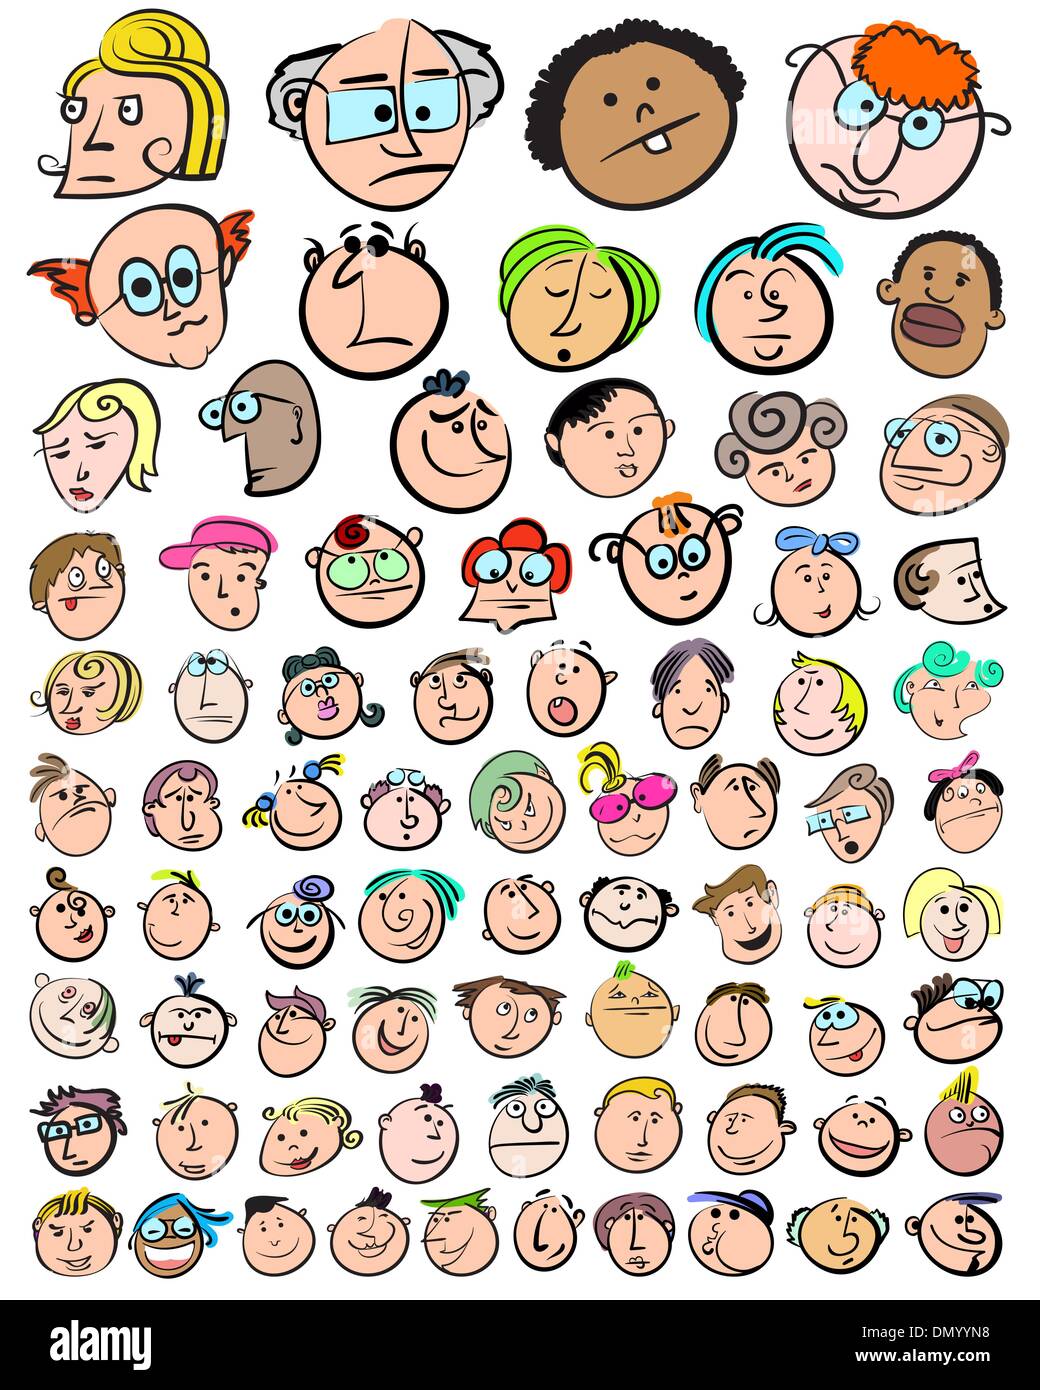 Menschen Gesicht Ausdruck Doodle Cartoon Icons Stock Vektor